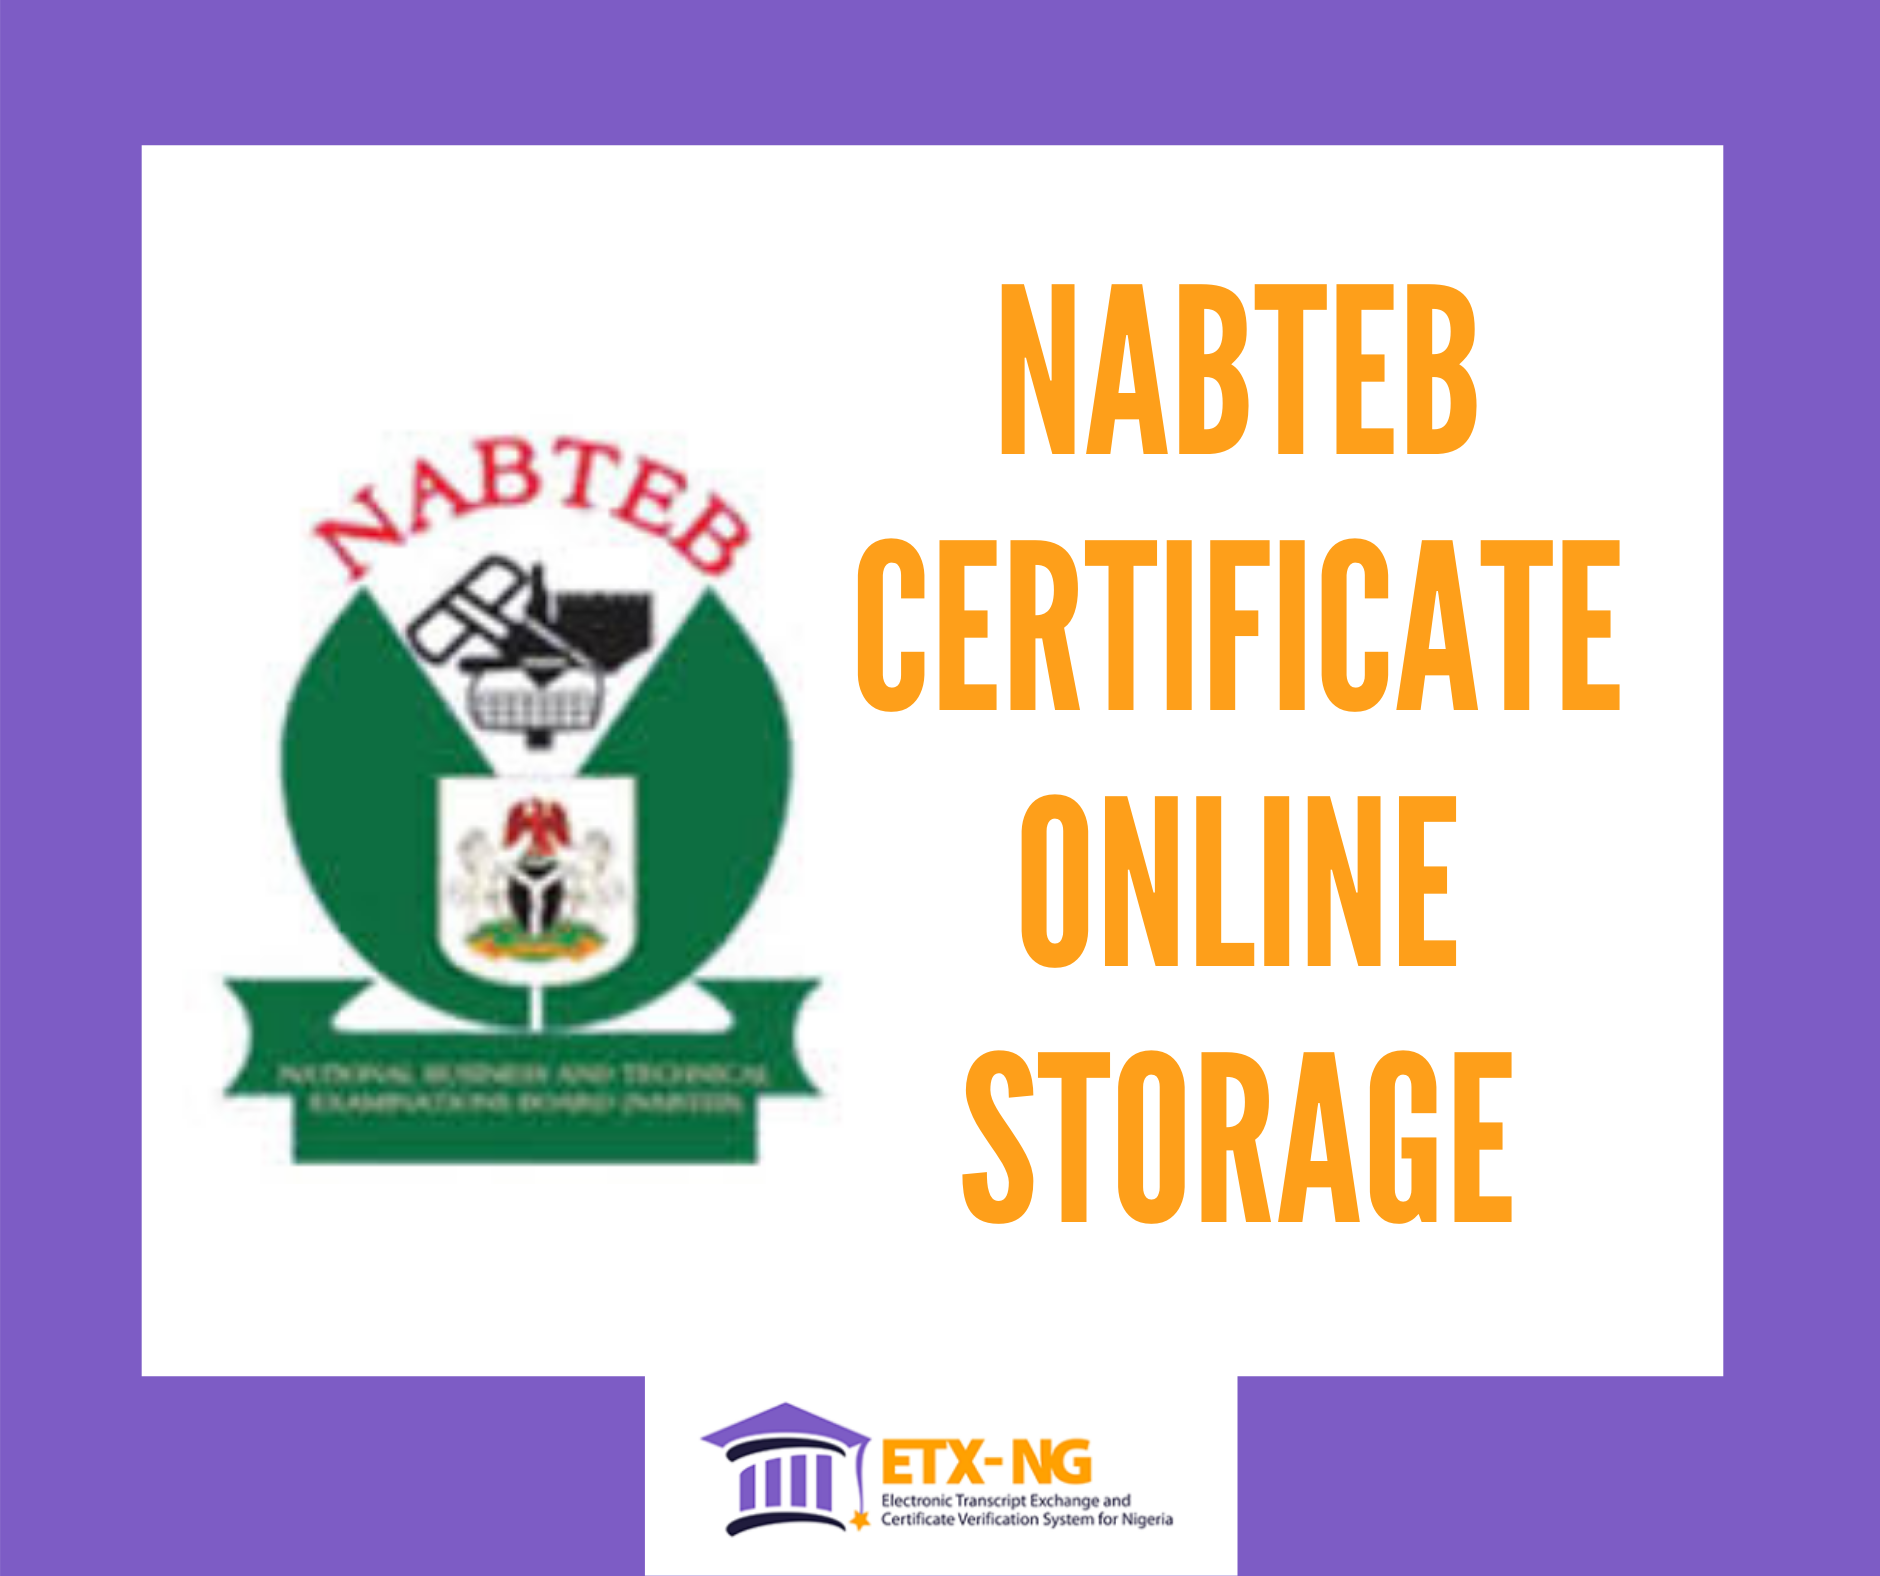 NABTEB Certificate Digital Storage MyCredentials Arena